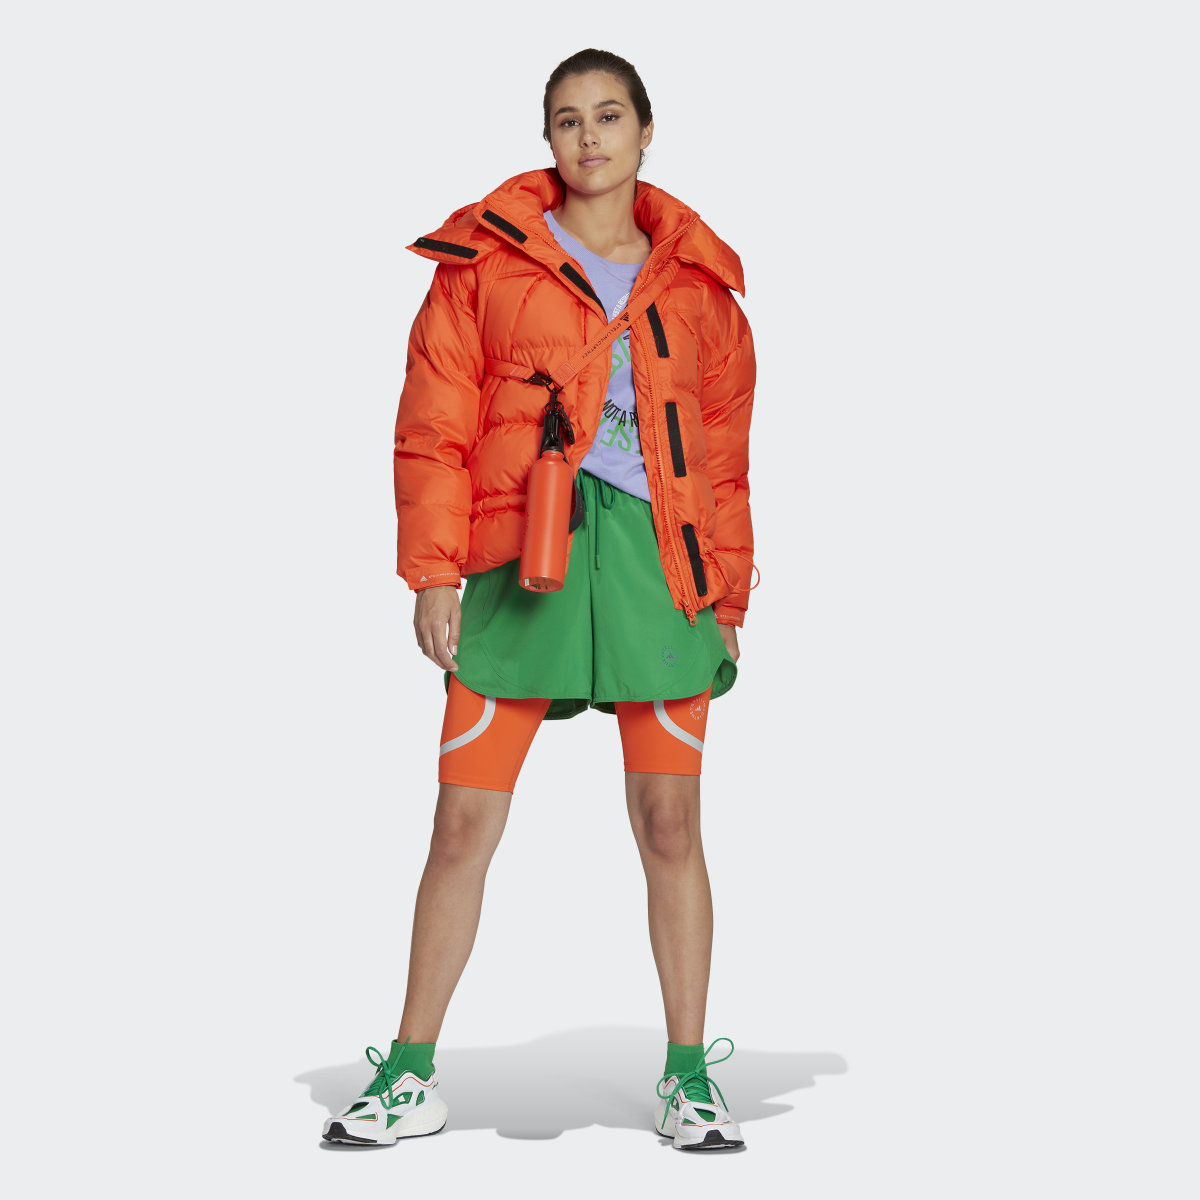 Adidas by Stella McCartney Mid-Length Padded Winter Jacket. 5